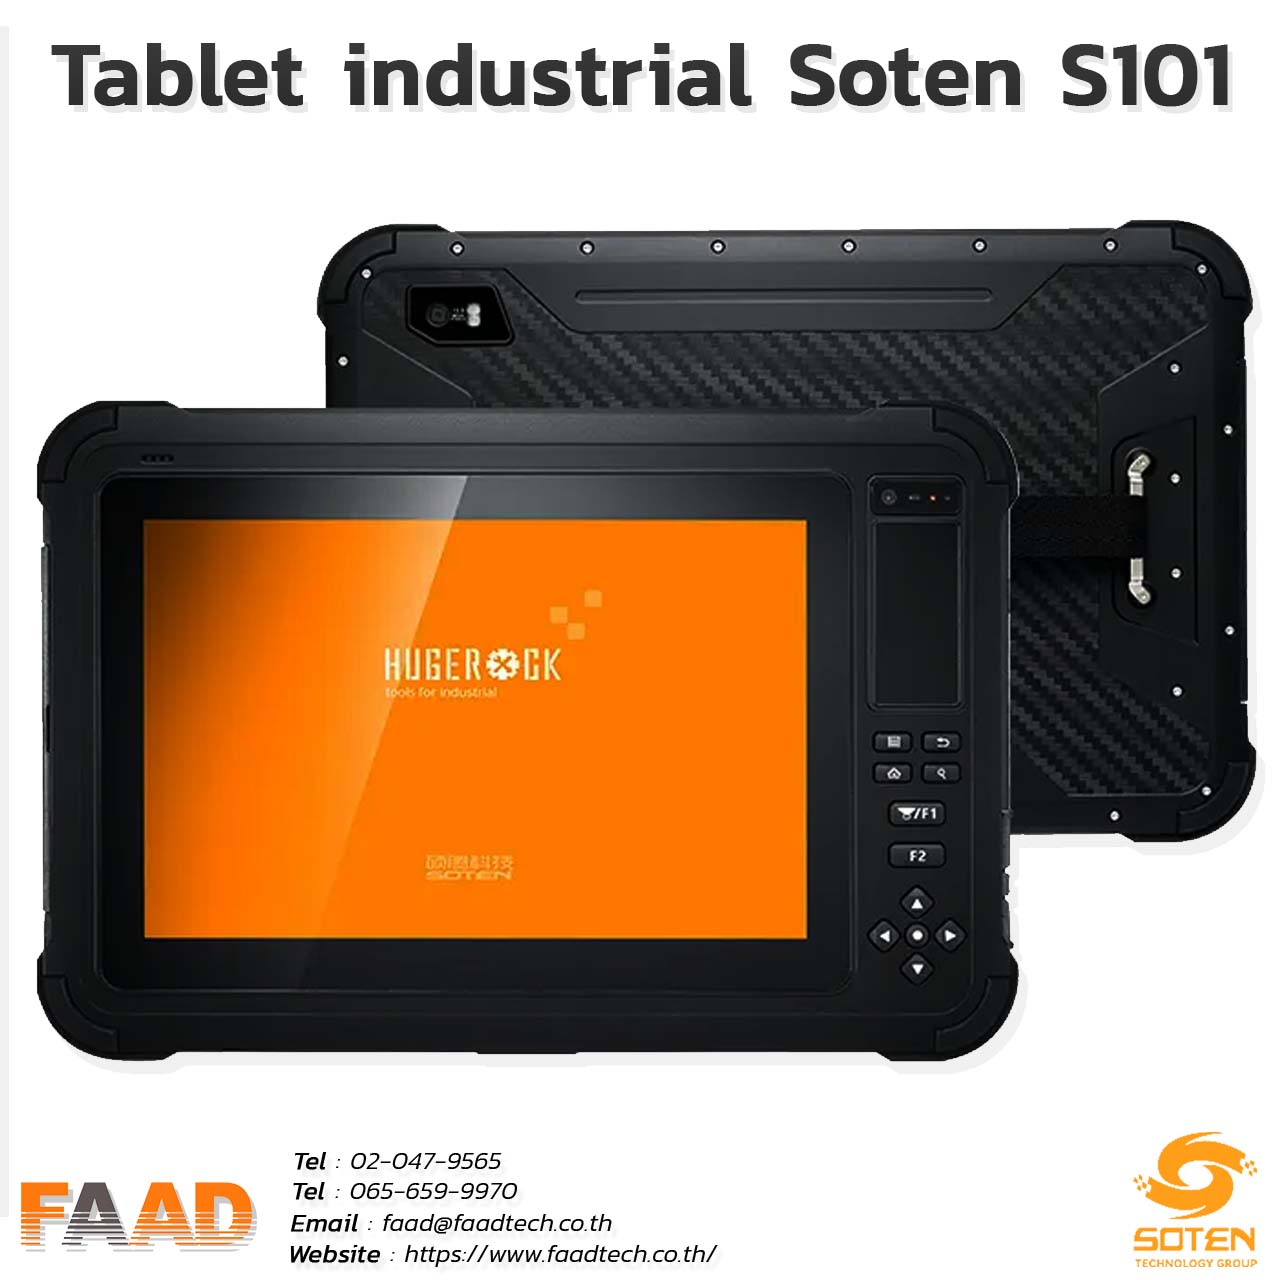 Tablet สำหรับงานอุตสาหกรรม (Industrial Tablet) – SOTAC S101